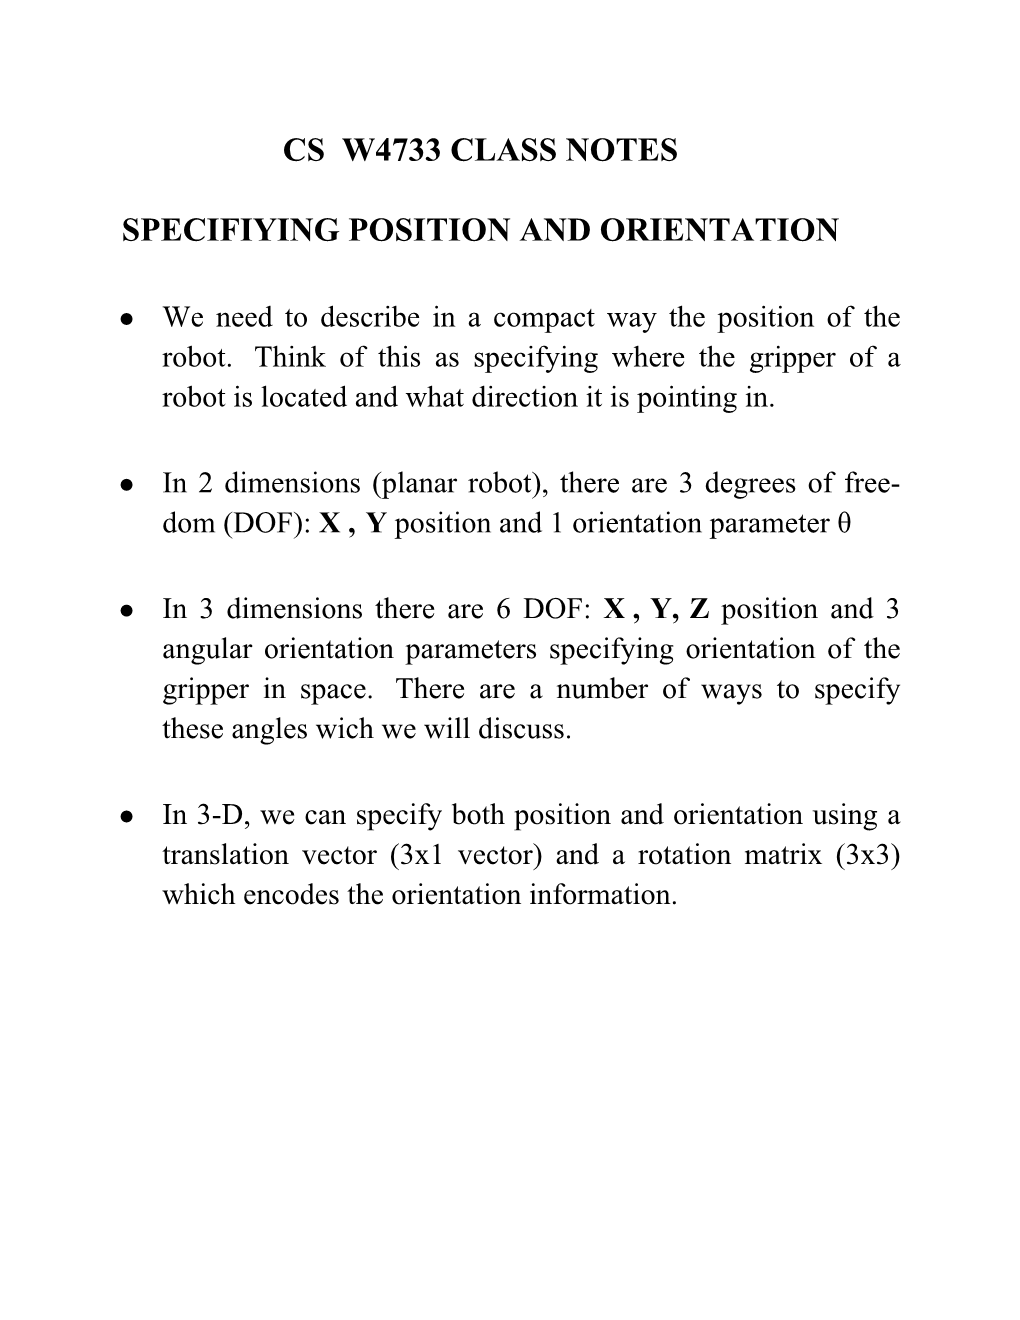 Rotation Matrix (3X3) Which Encodes the Orientation Information